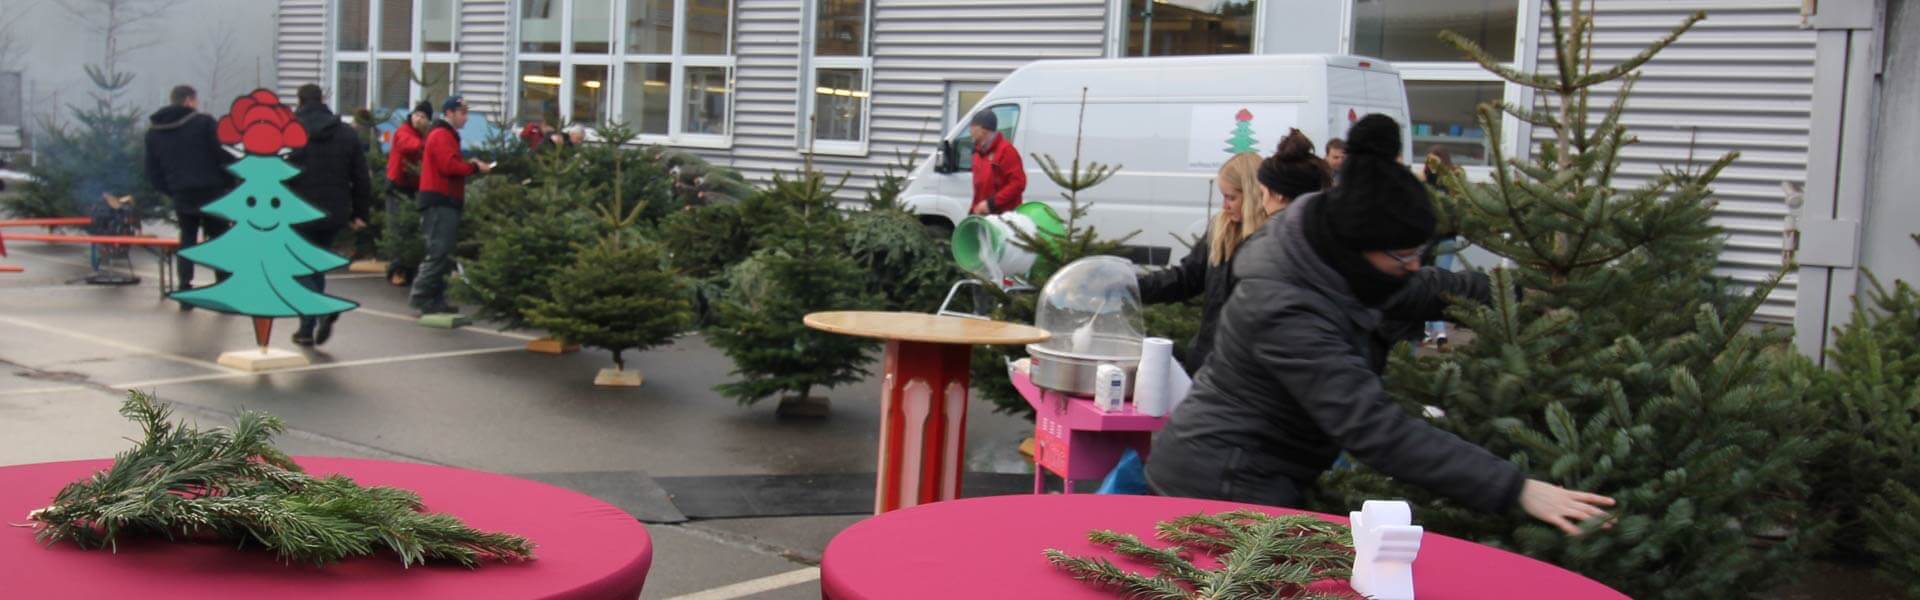 Christmas party idea fir tree cutting b-ceed events